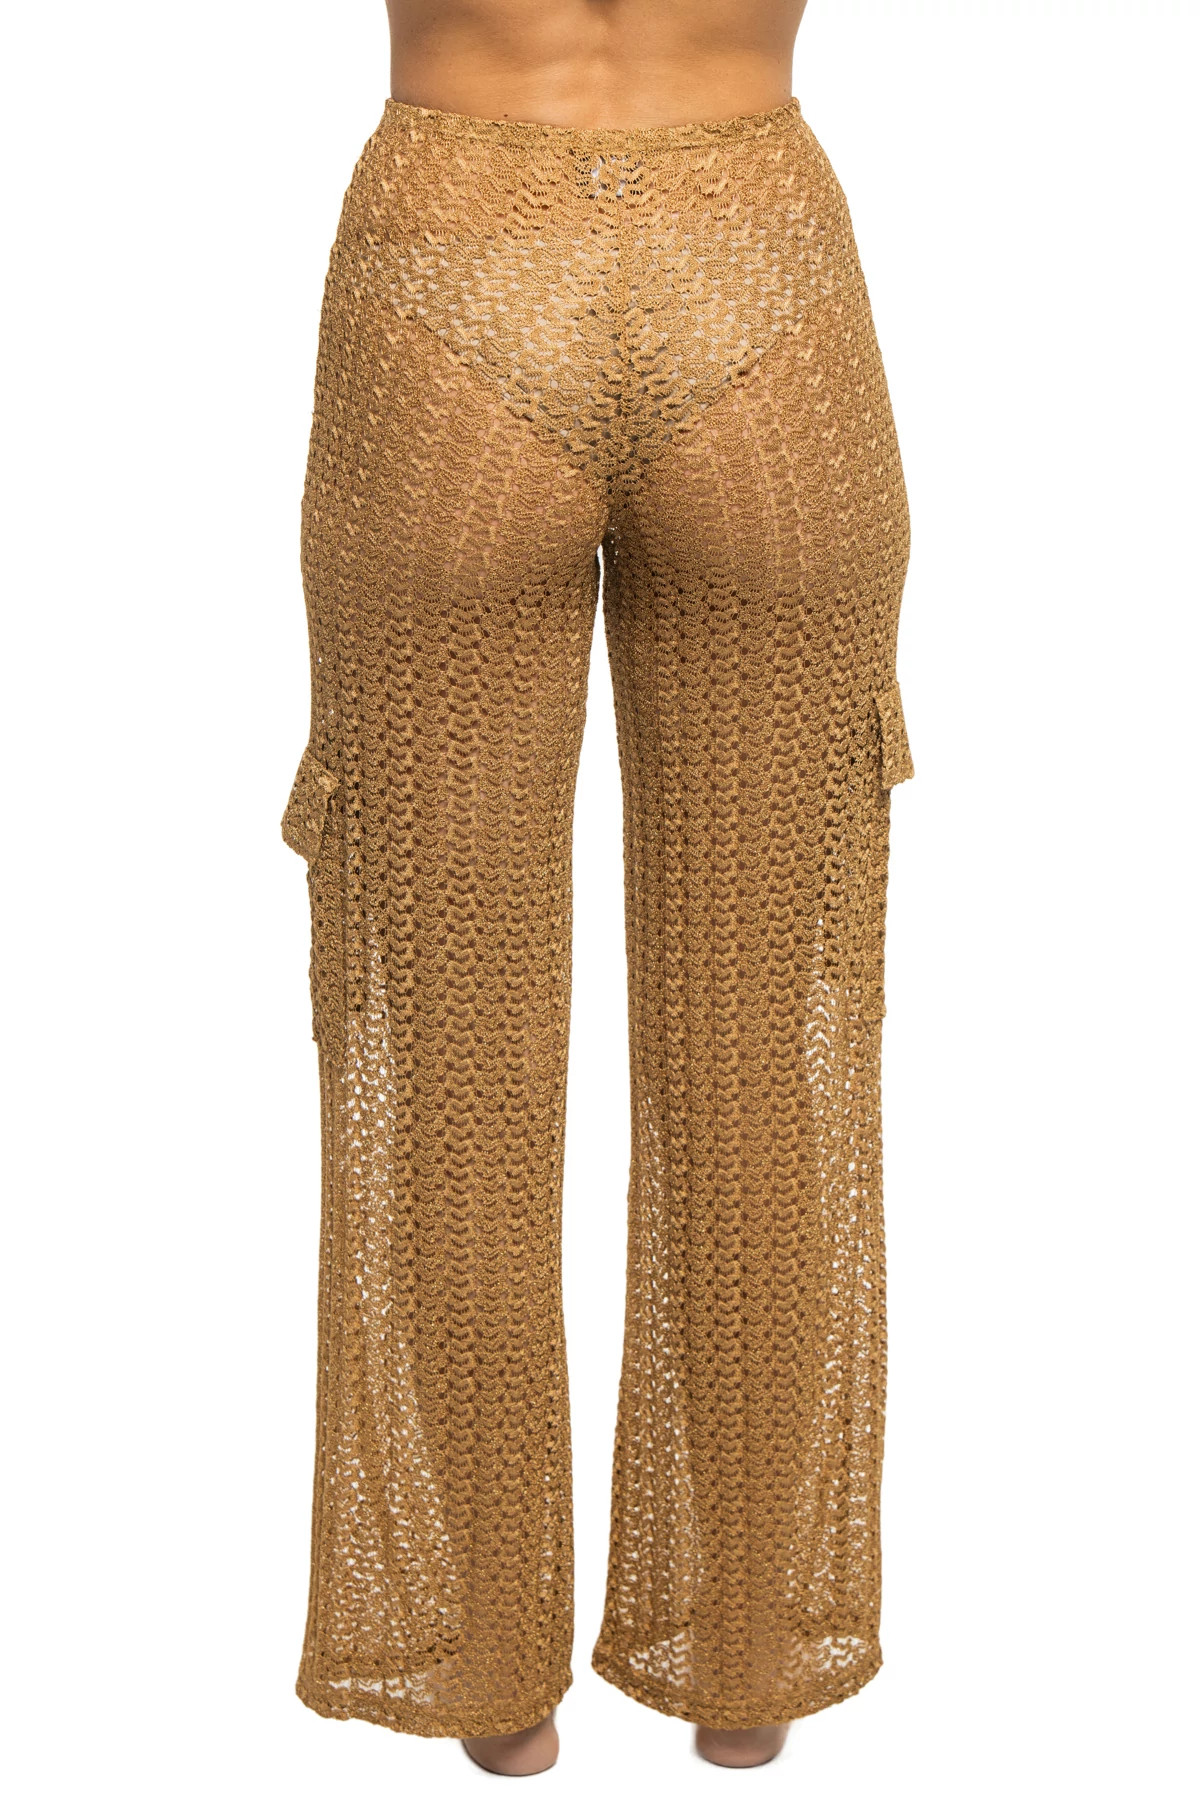 GOLD Metallic Crochet Cargo Pants image number 2